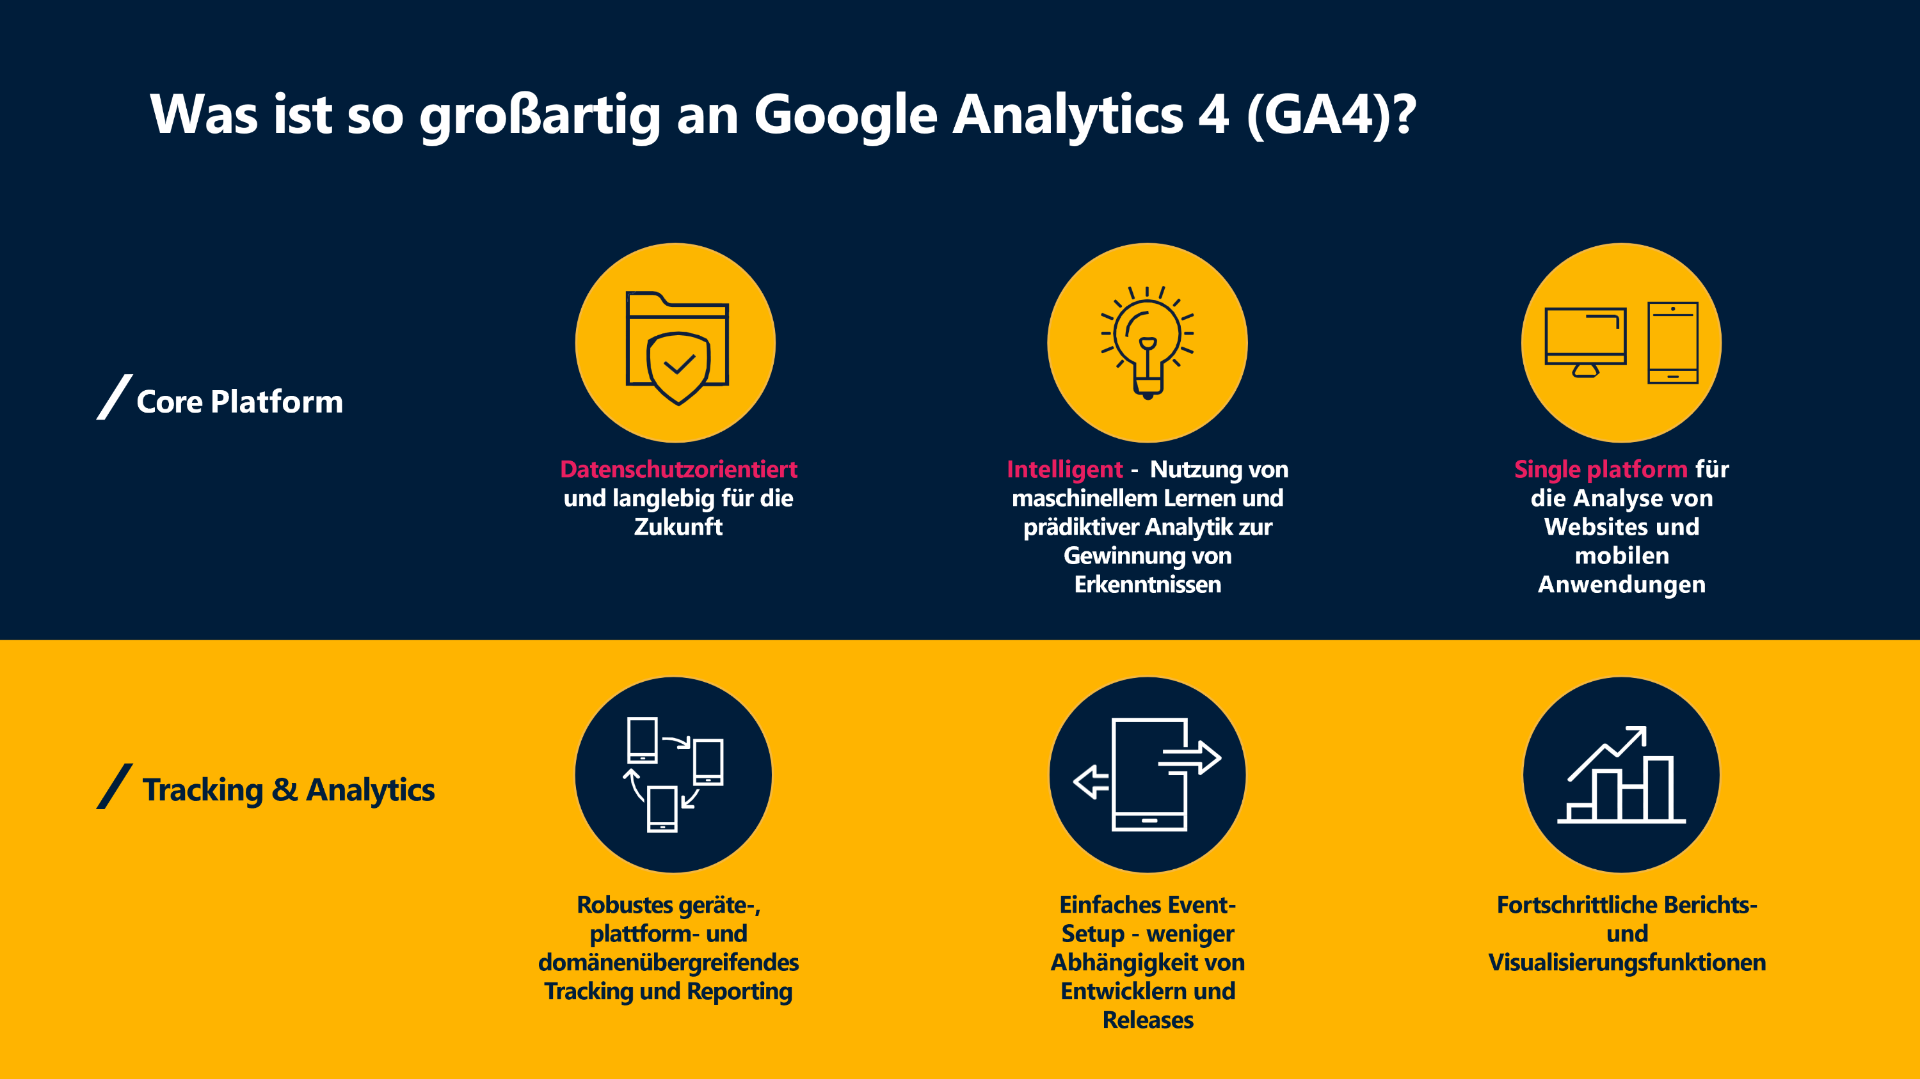 GA4: Successful Google Analytics migration in 6 steps